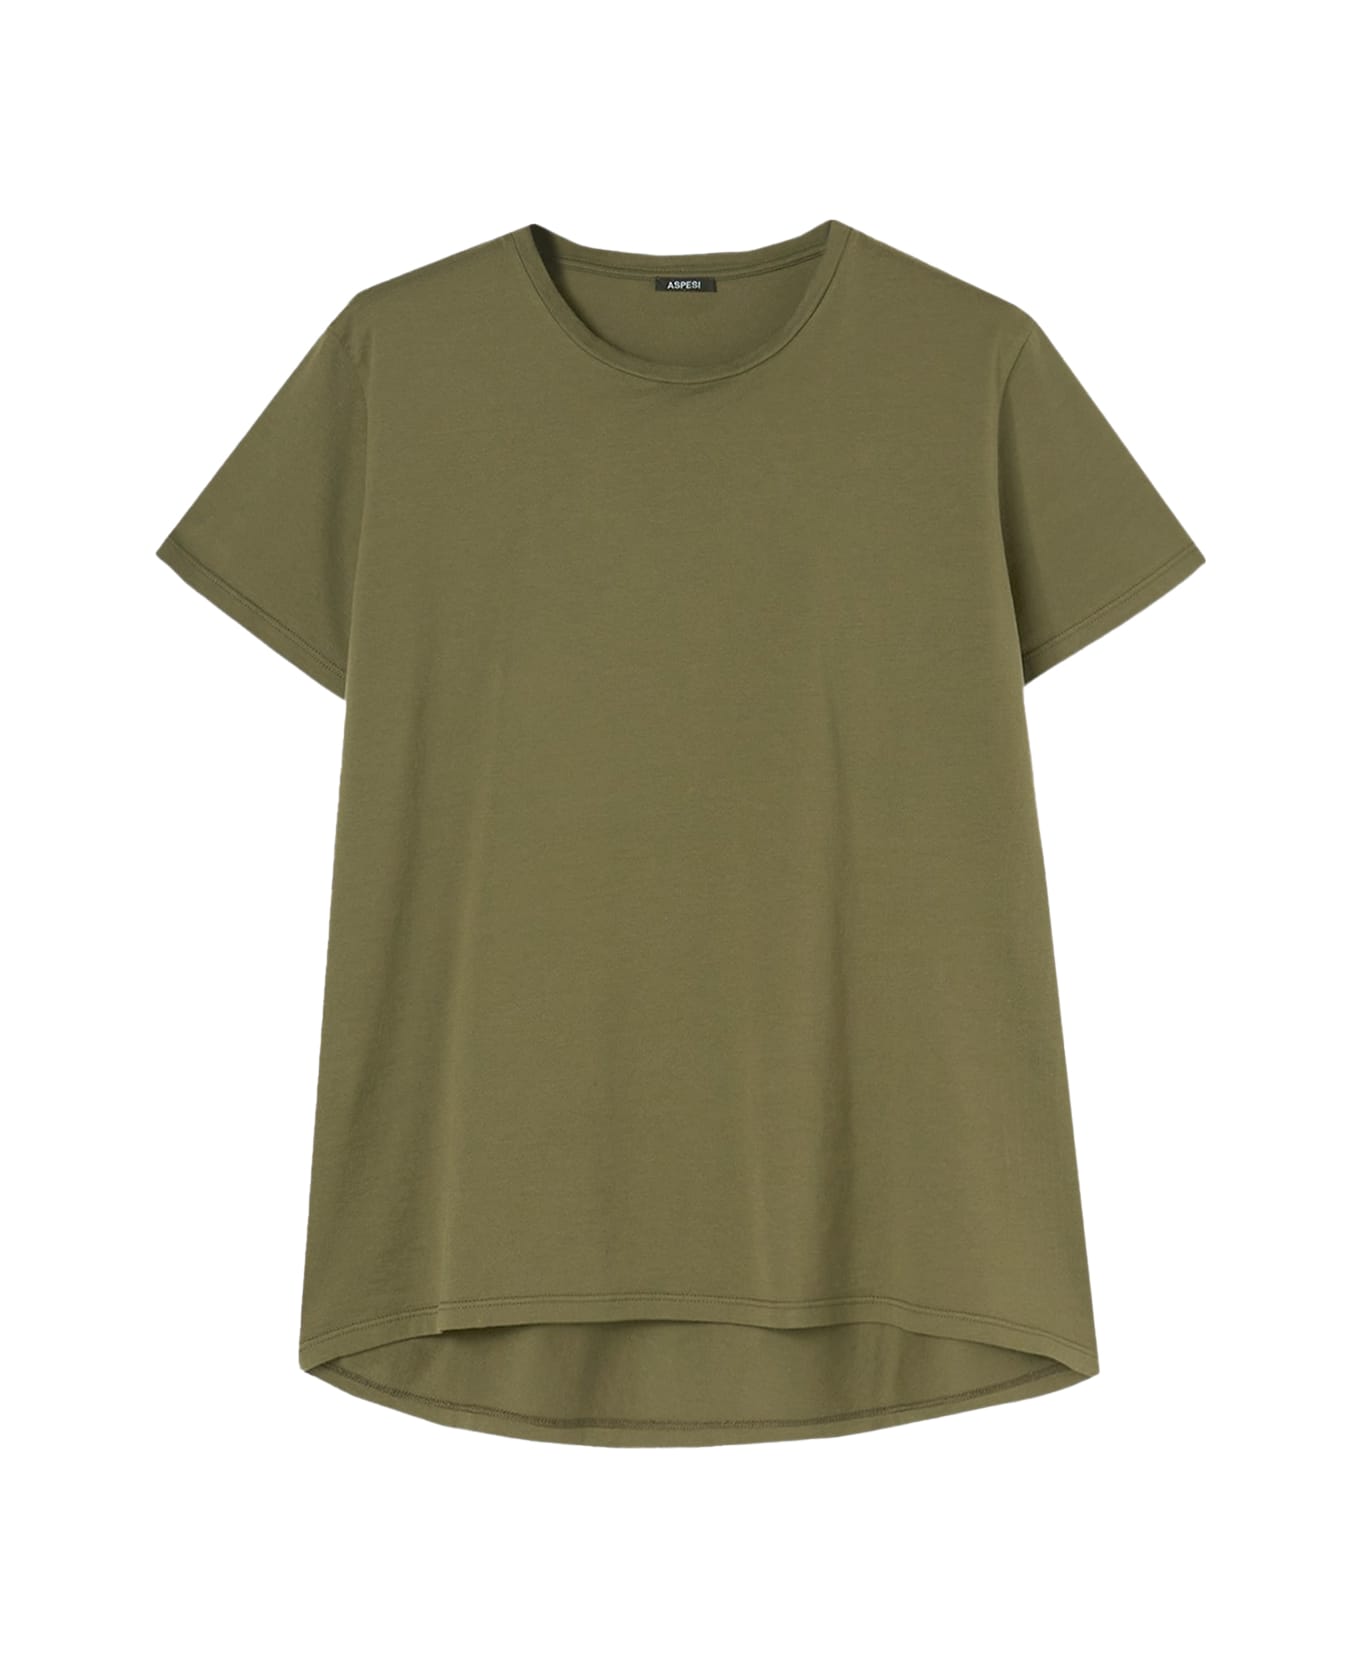 Aspesi Military Green T-shirt - Militare